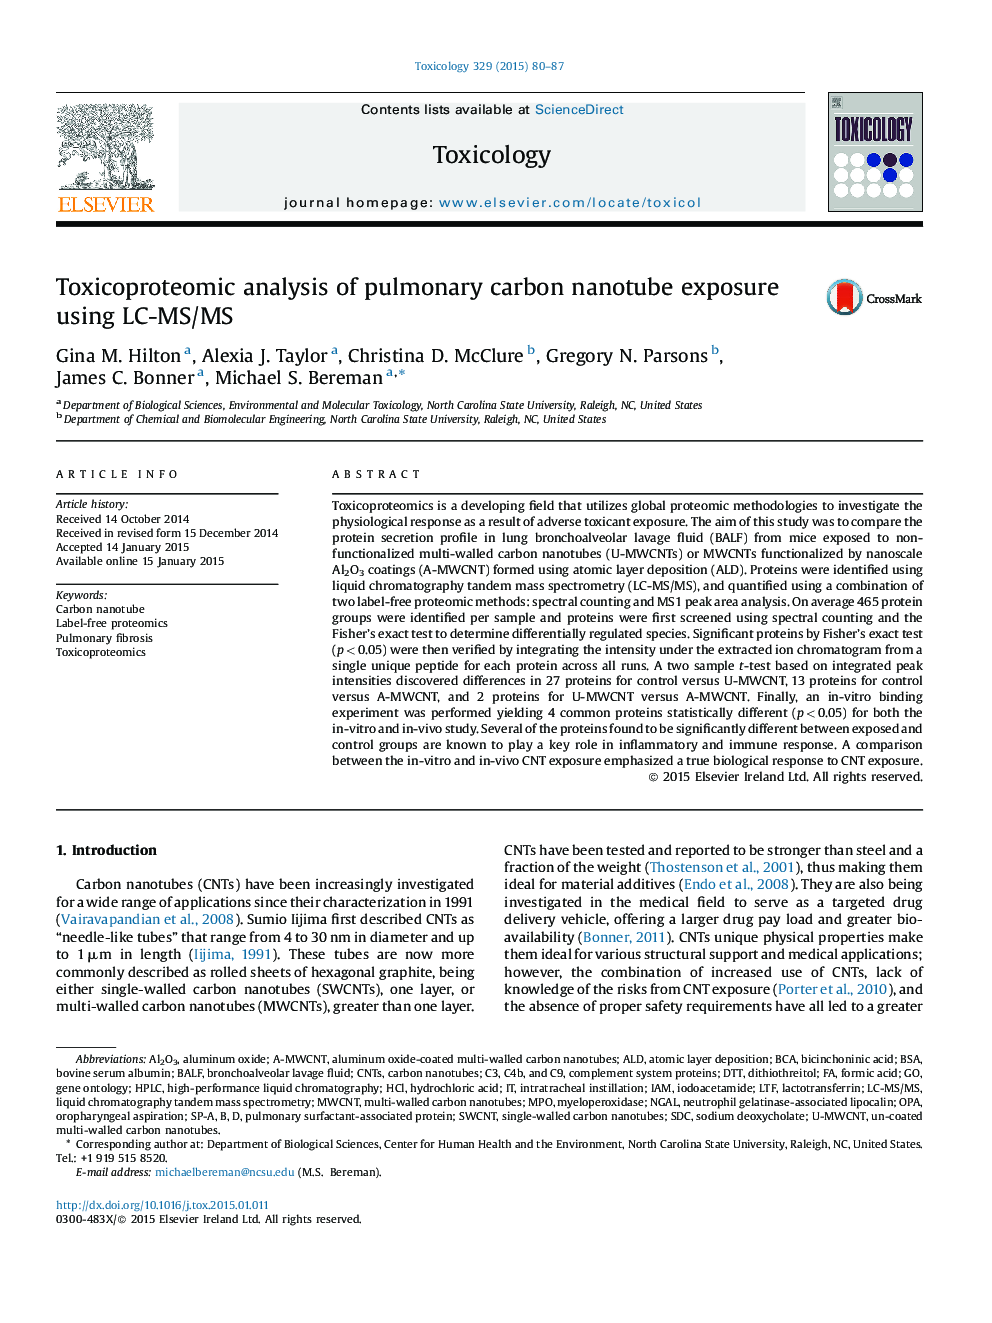 Toxicoproteomic analysis of pulmonary carbon nanotube exposure using LC-MS/MS